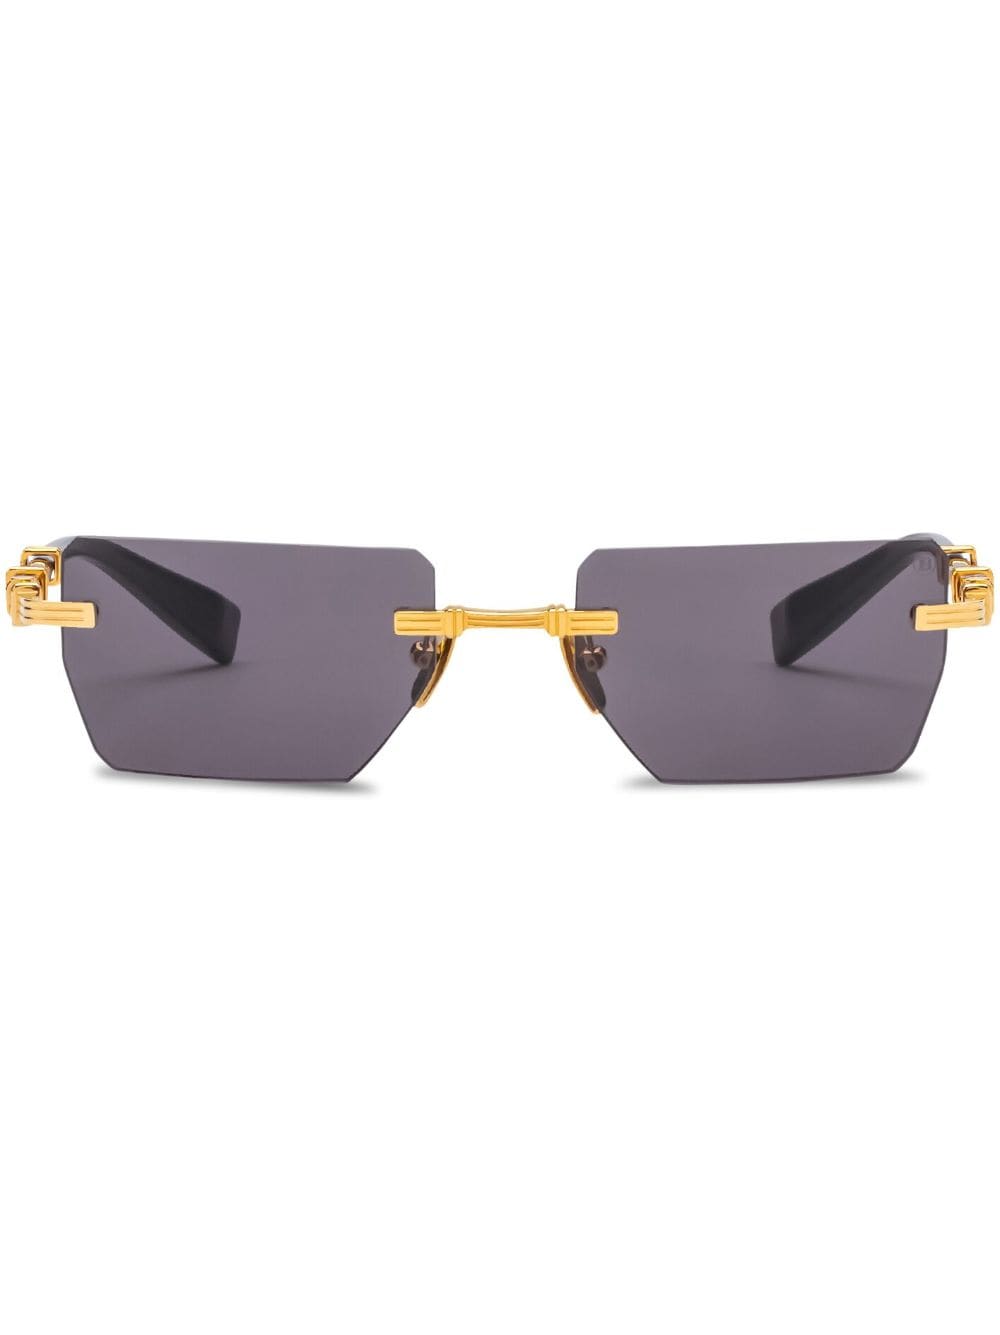 Image 1 of Balmain Eyewear Pierre rimless sunglasses